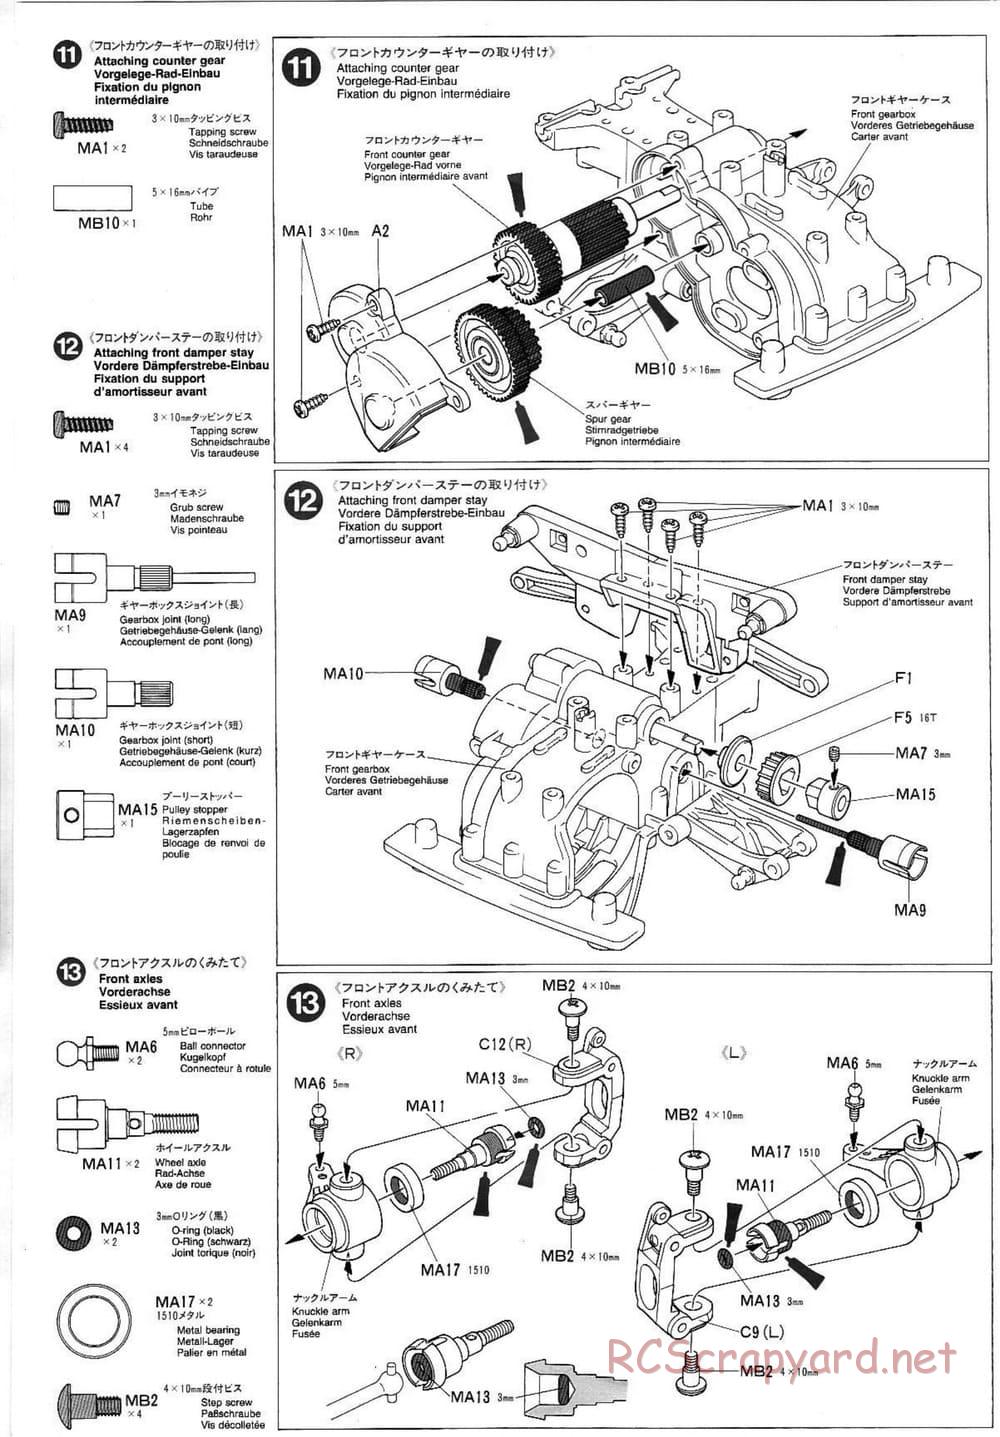 Tamiya - Mitsubishi Lancer Evolution V WRC - TA-03F Chassis - Manual - Page 8